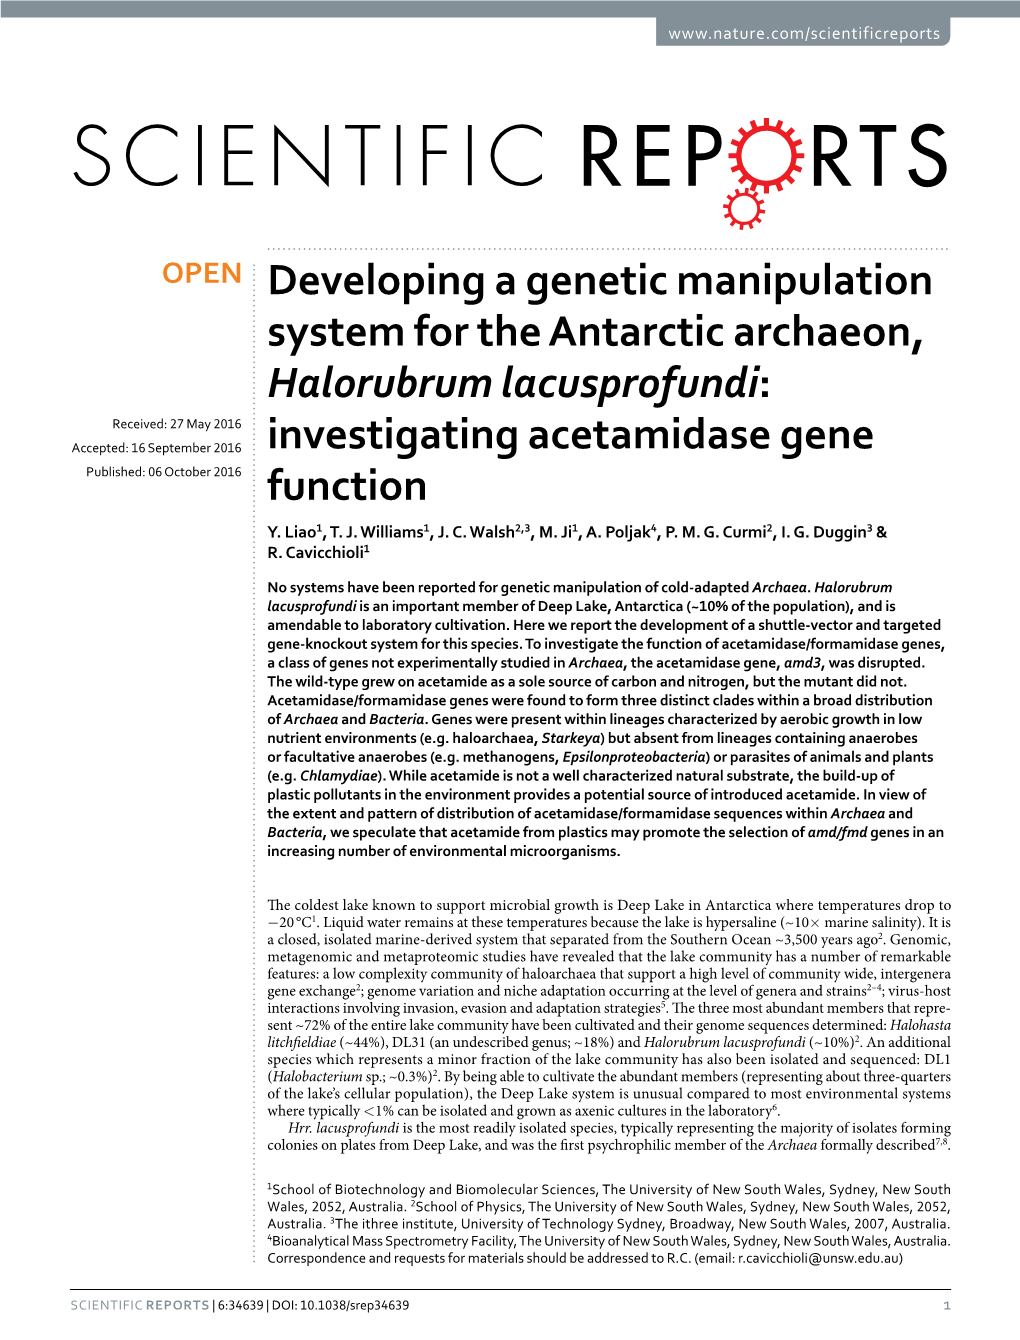 Developing a Genetic Manipulation System for the Antarctic Archaeon, Halorubrum Lacusprofundi: Investigating Acetamidase Gene Function